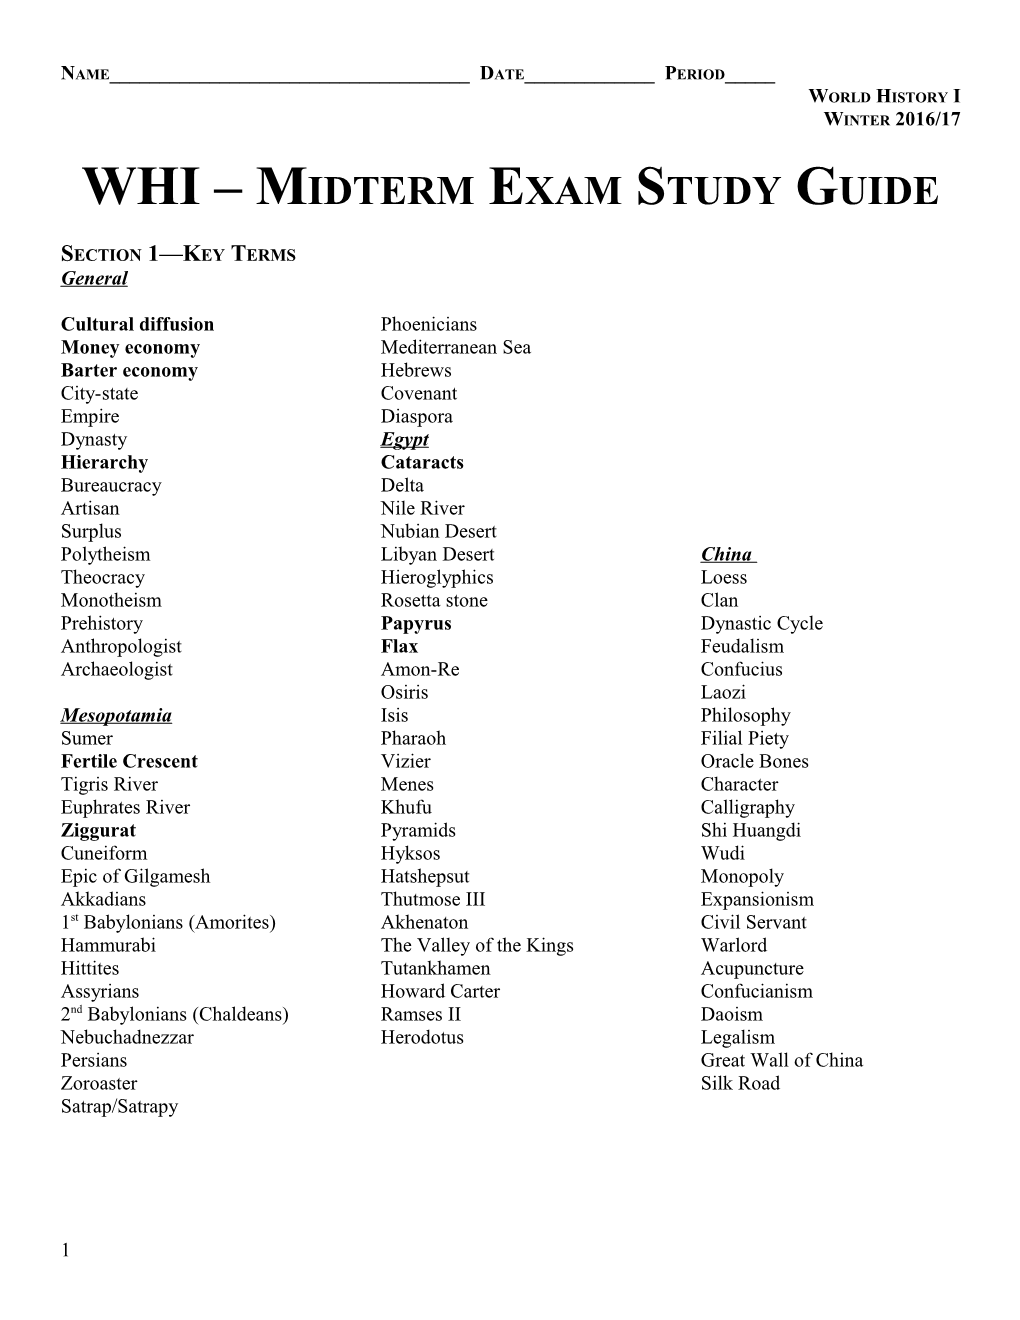 WHI Midterm Exam Study Guide